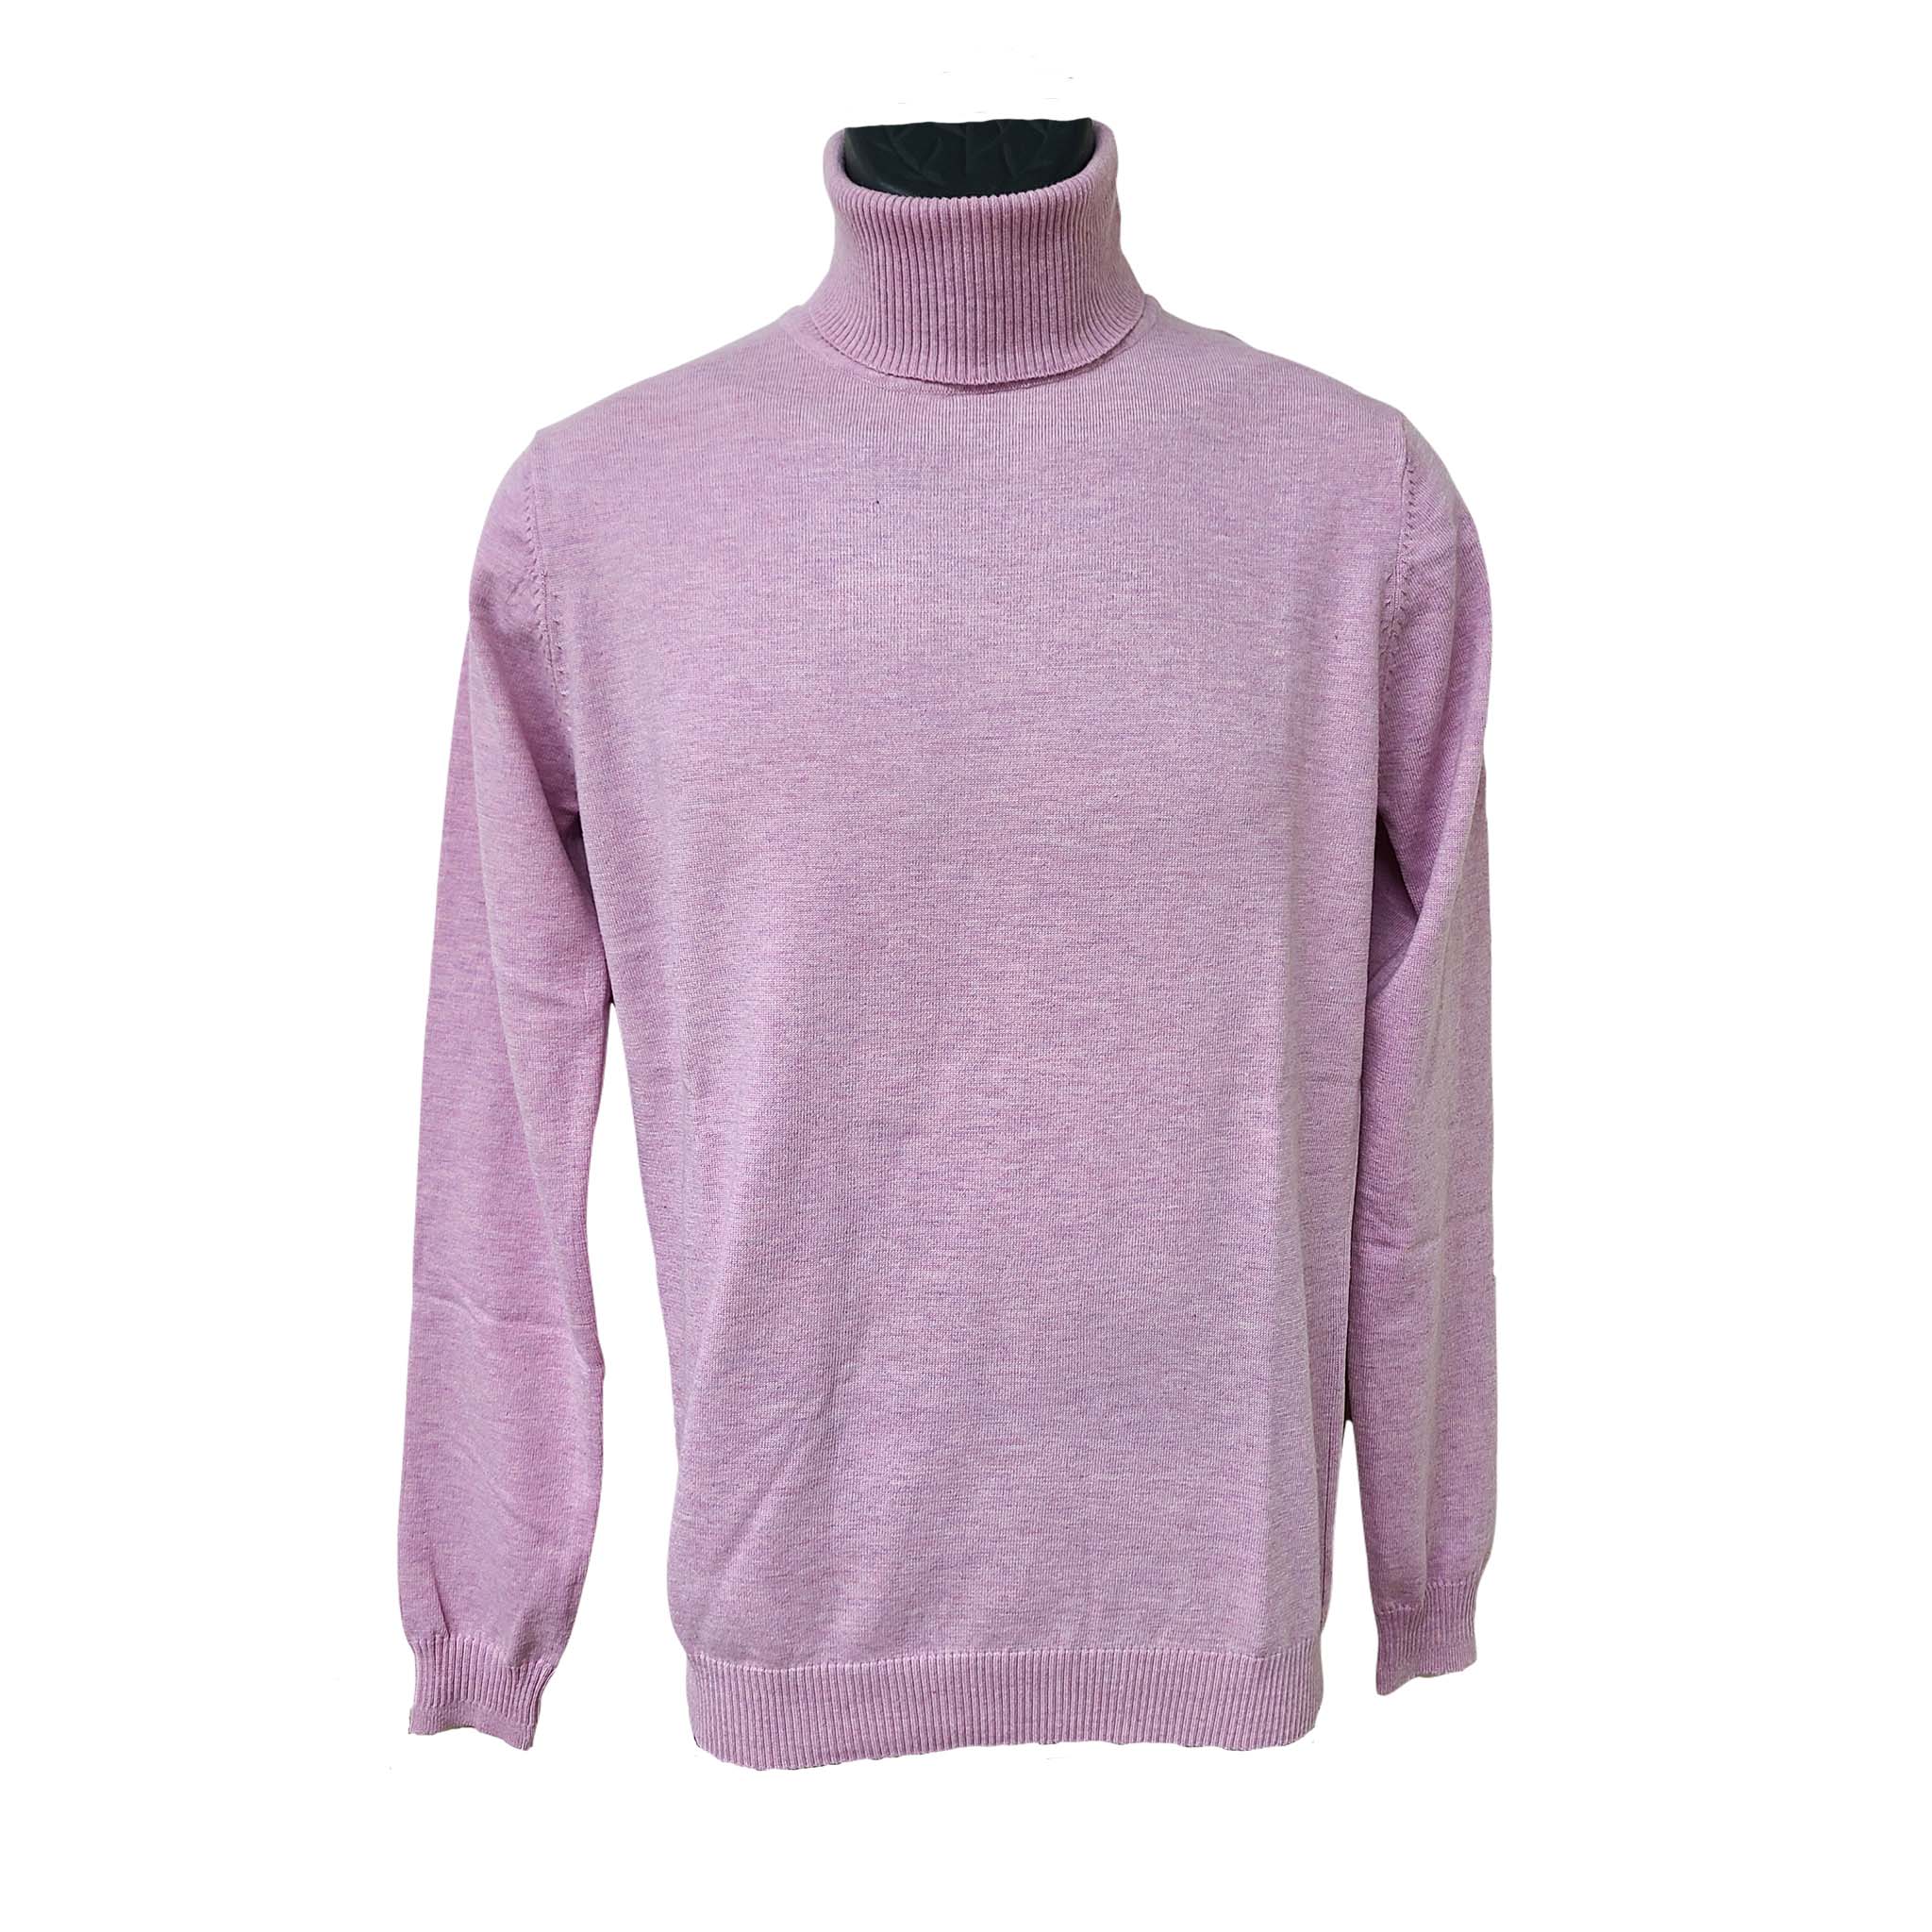 Men's Pink Turtle Neck Sweater